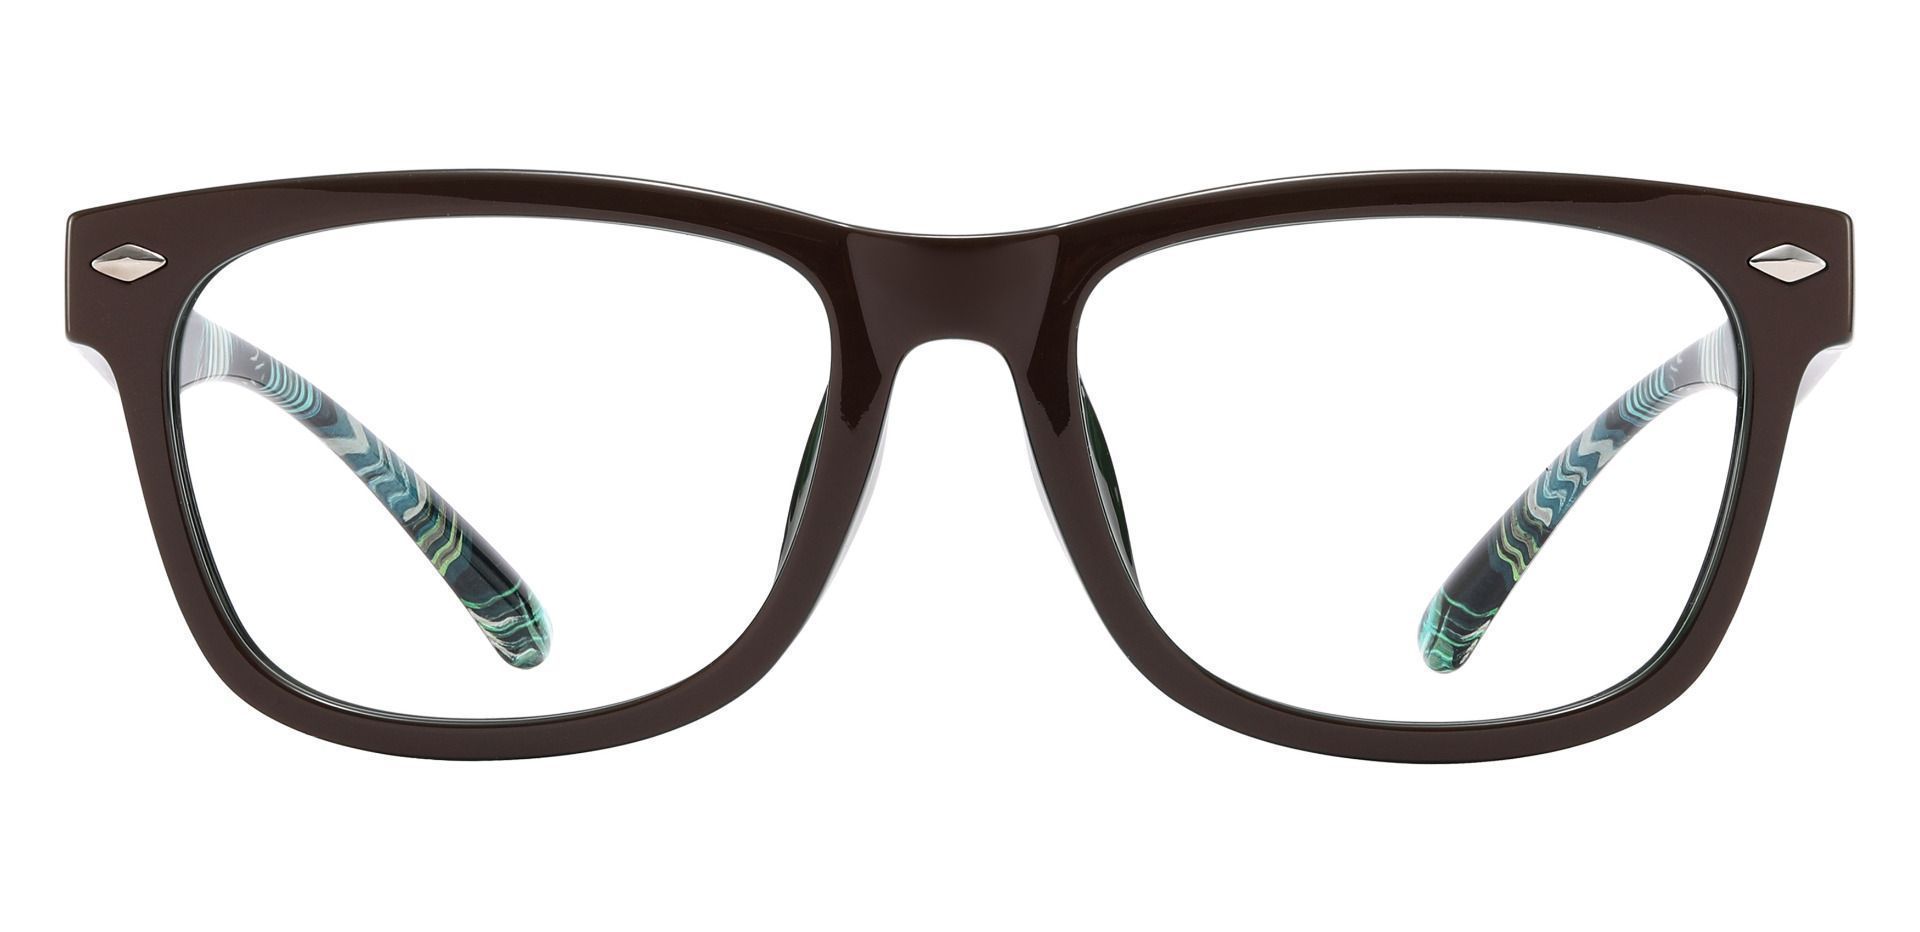 Shaler Square Progressive Glasses - Brown